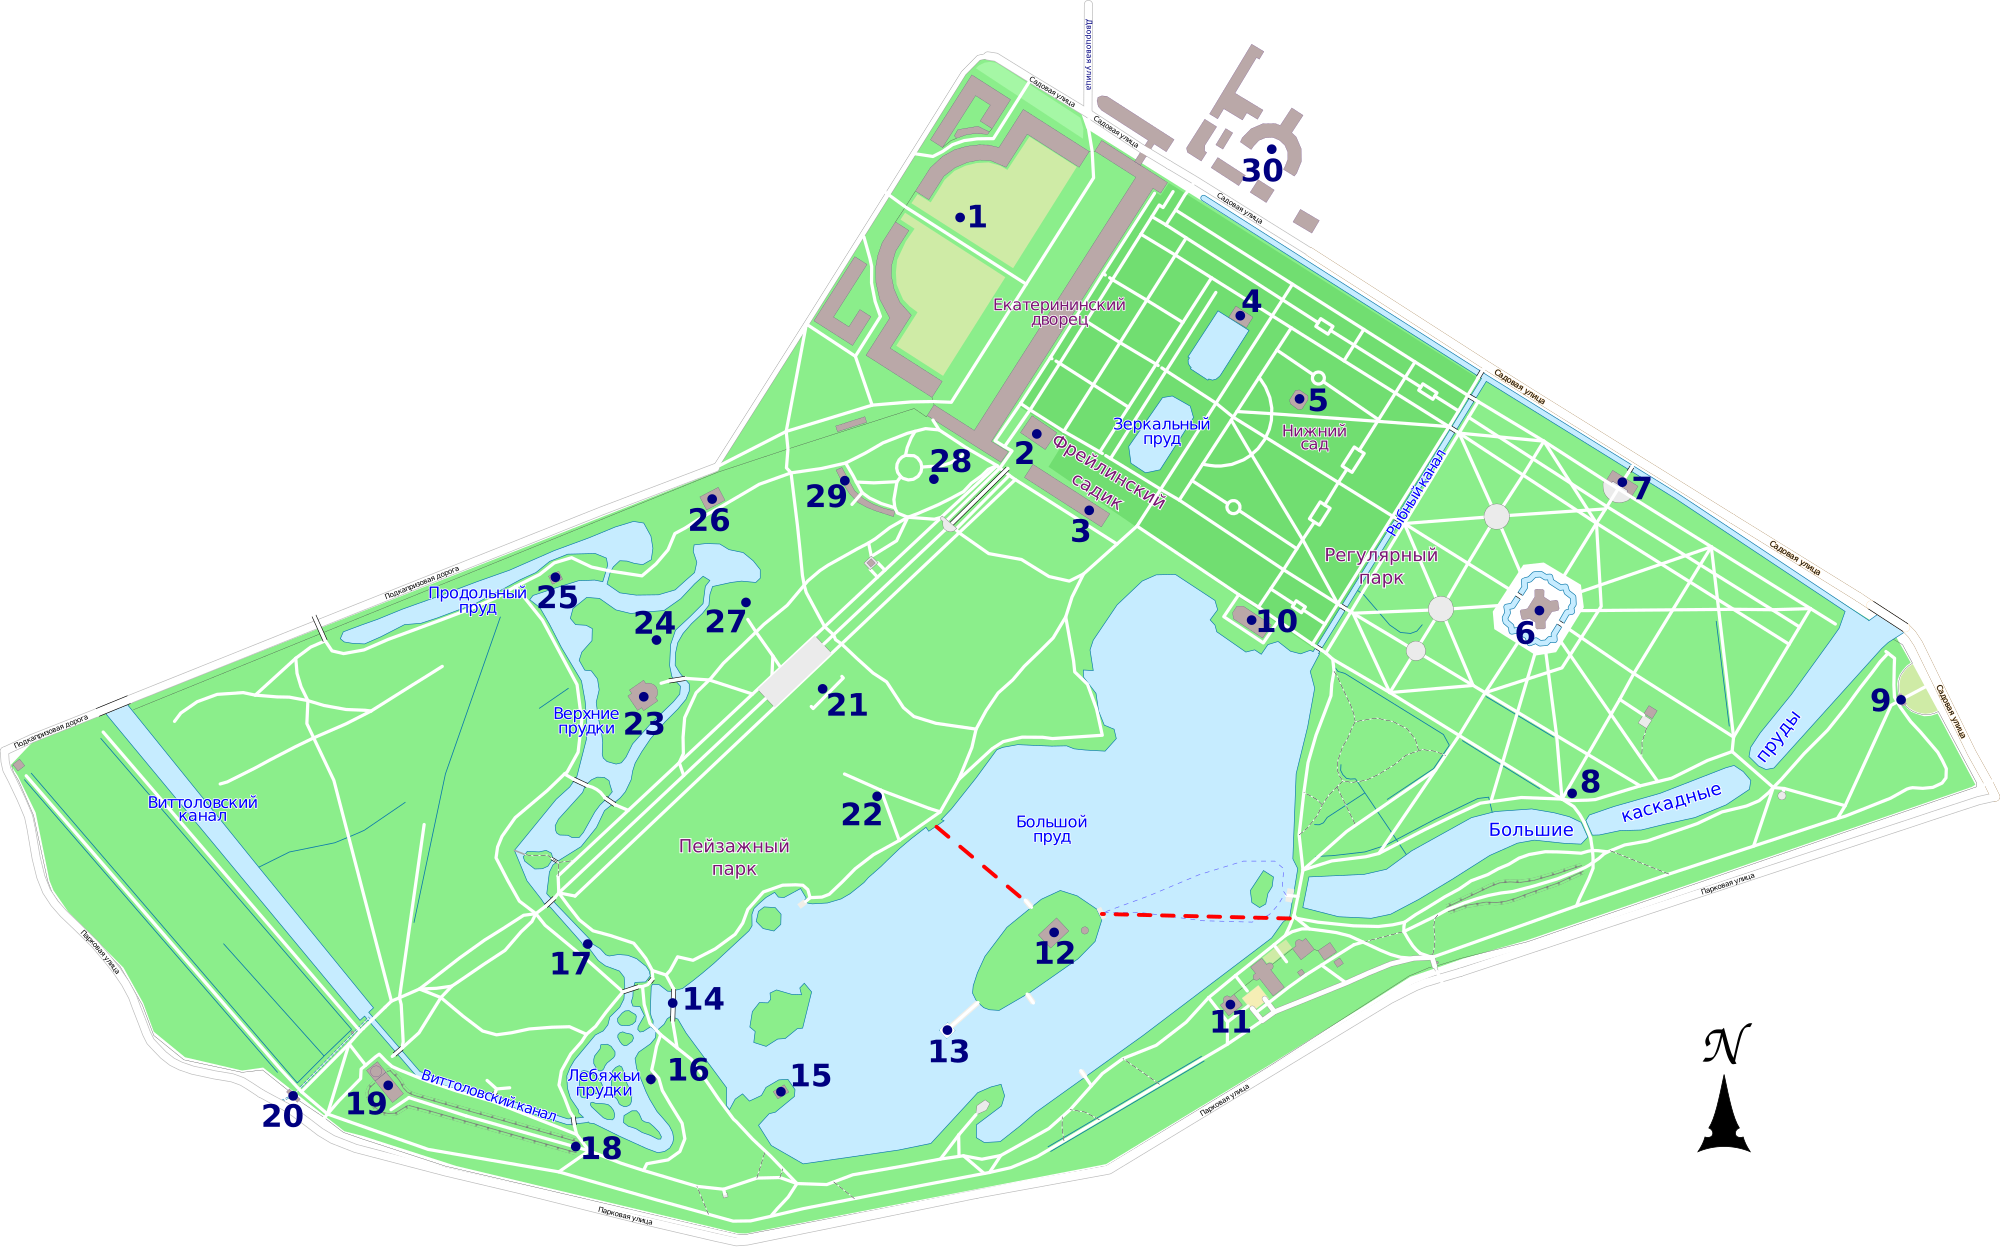 Царское село карта